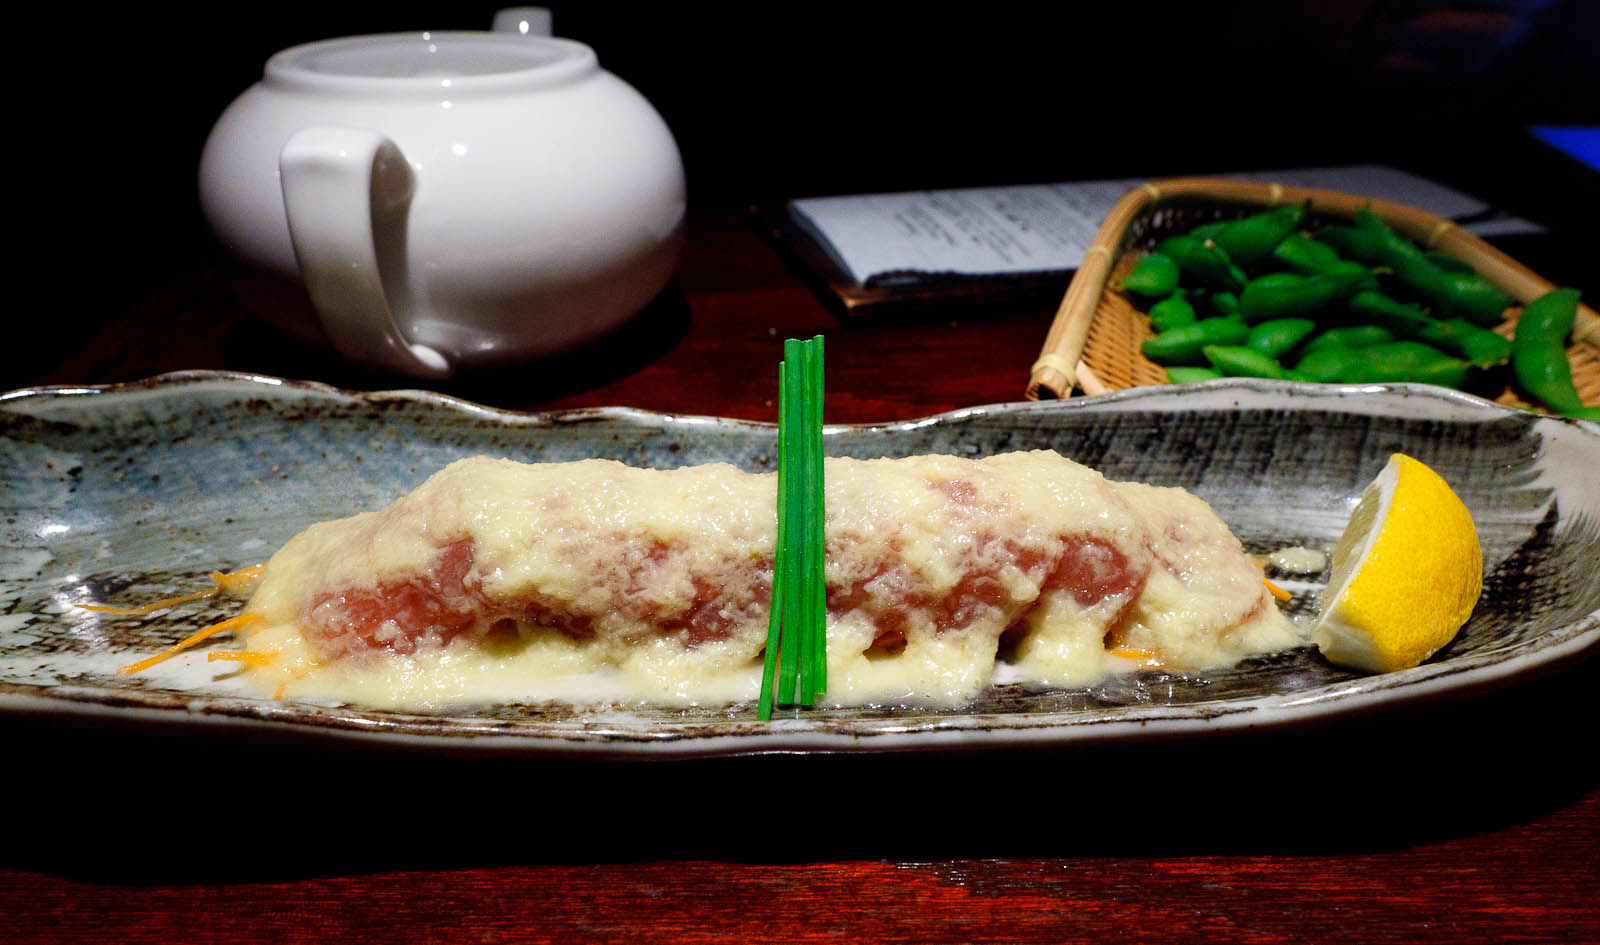 Maguro Carpaccio: medium fatty tuna sashimi, green yuzu pepper sauce ($14.95)